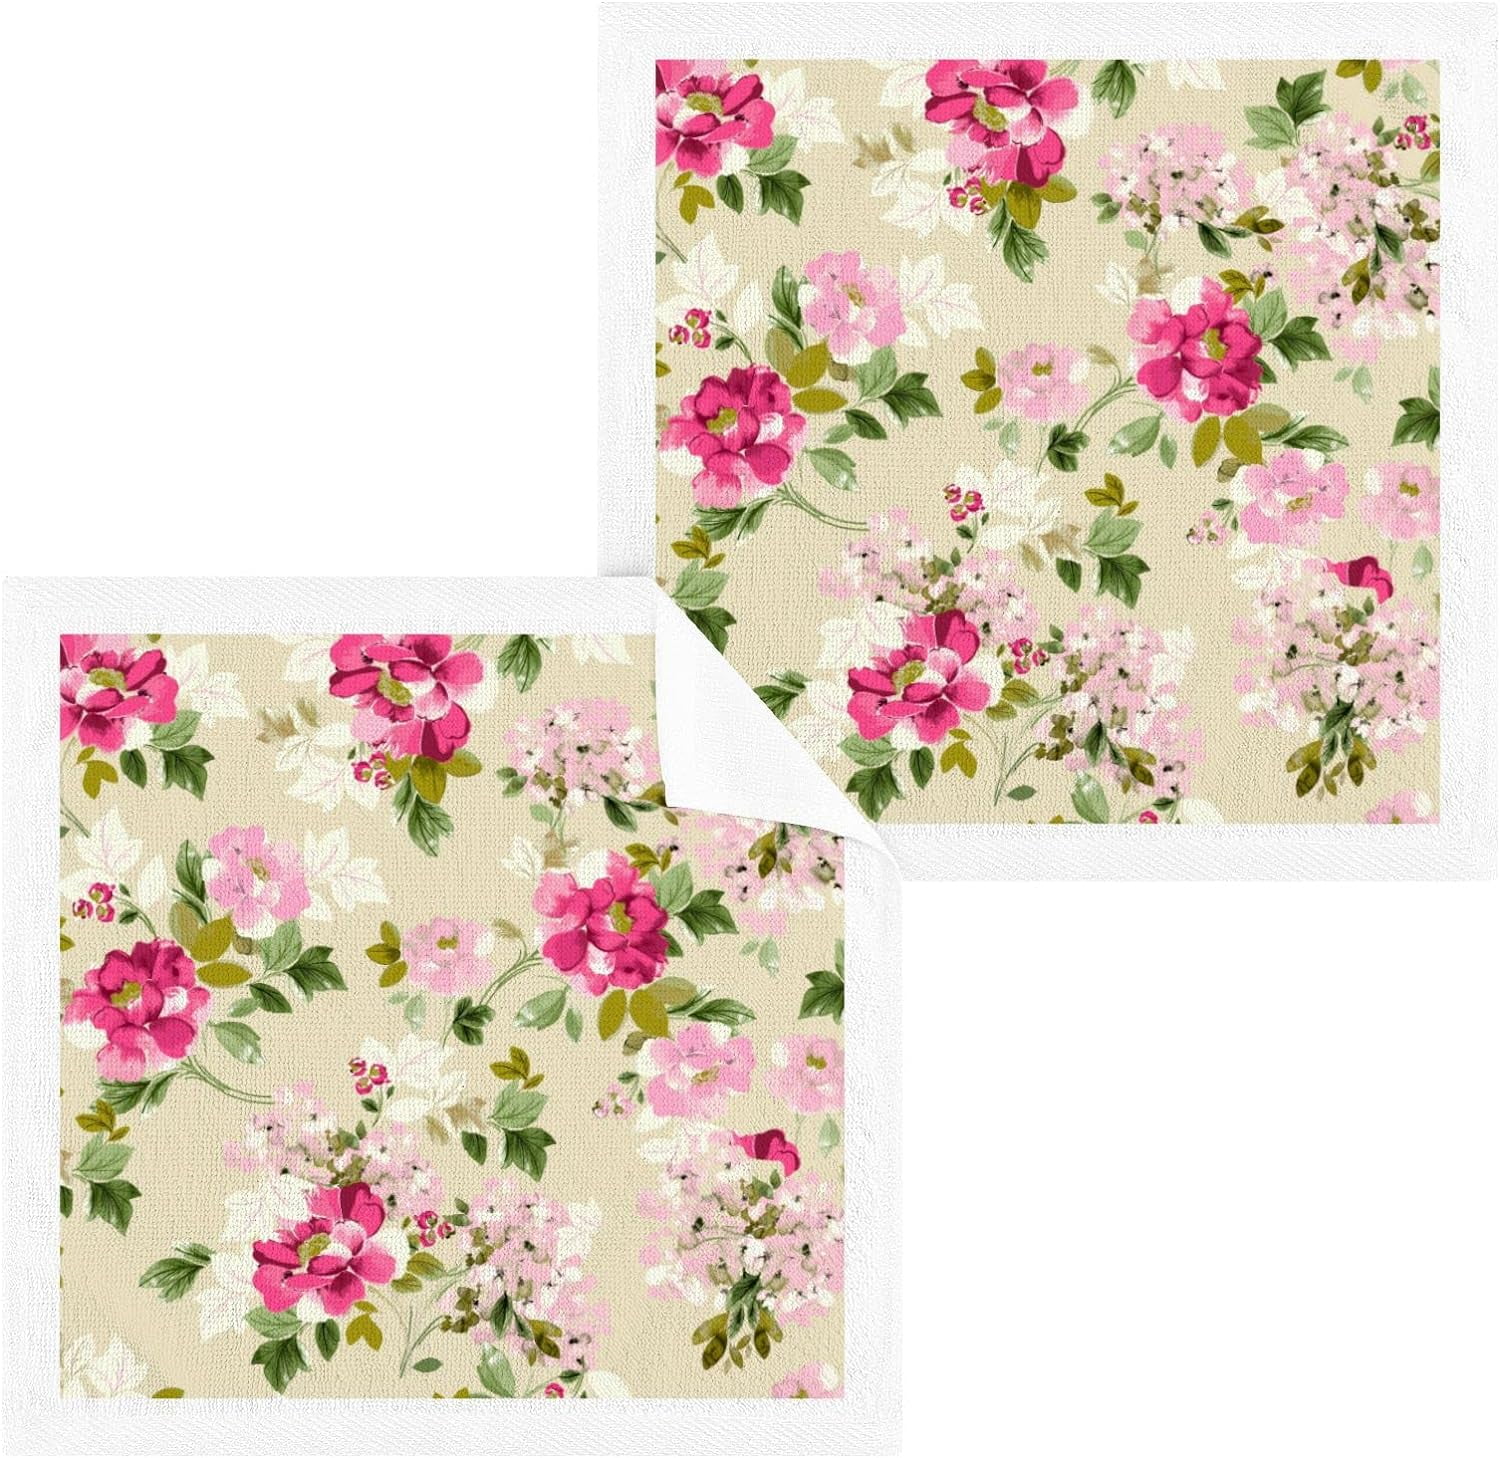 Hyjoy Violet Roses Wash Cloths 4 Pack - 12 x 12 Inch Super Soft ...